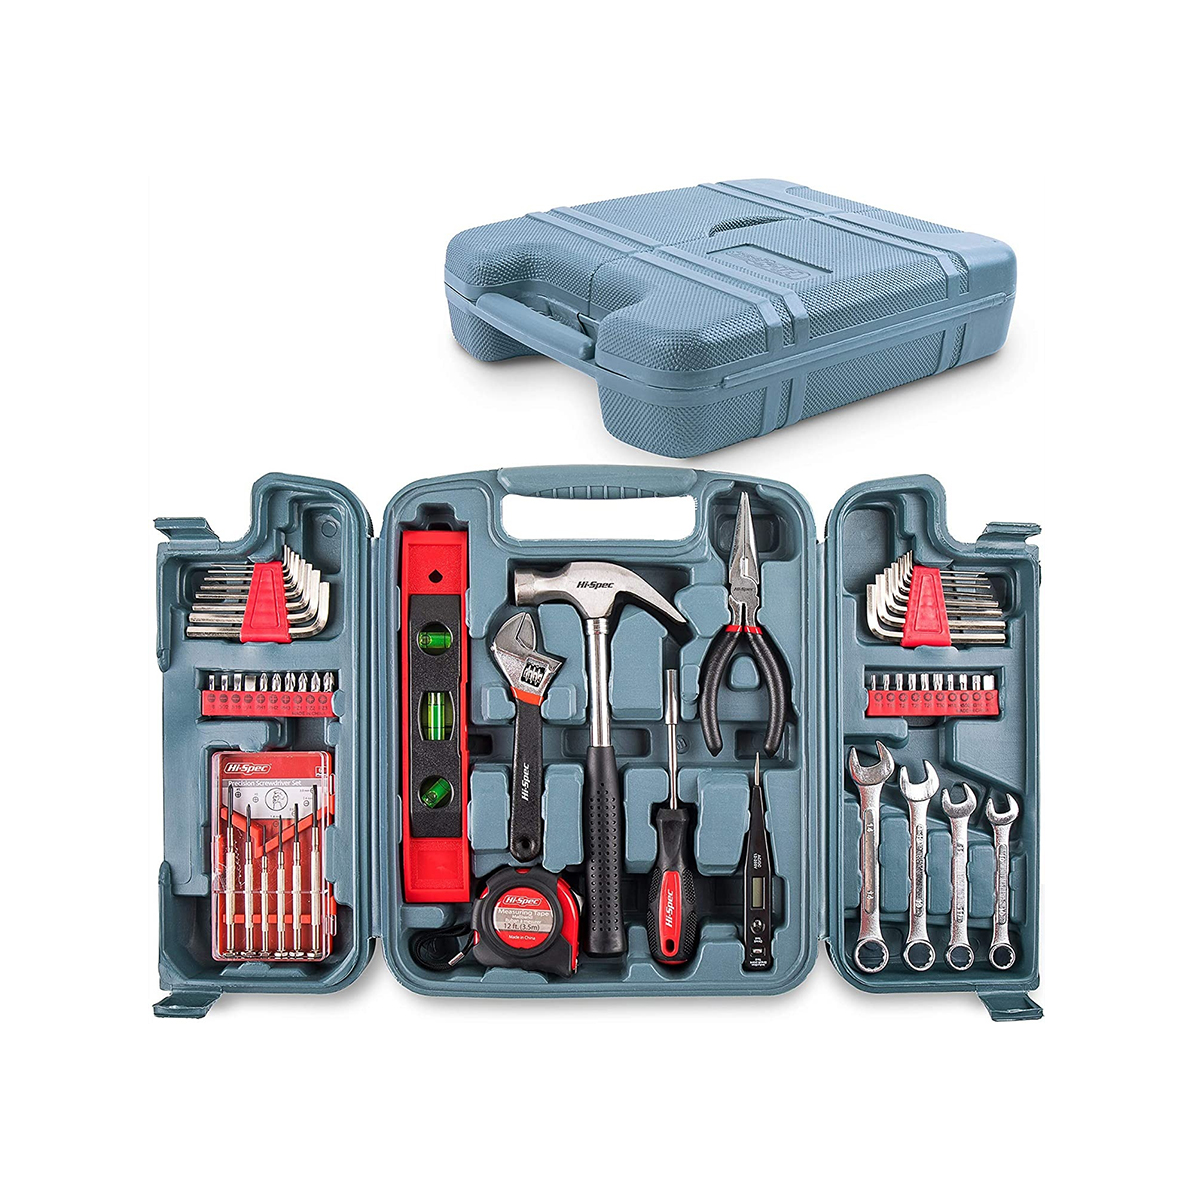 53pcs Muti Purpose Combo Kit เครื่องมือช่างในครัวเรือน Home Repairing Diy Kits Complete Tool Set